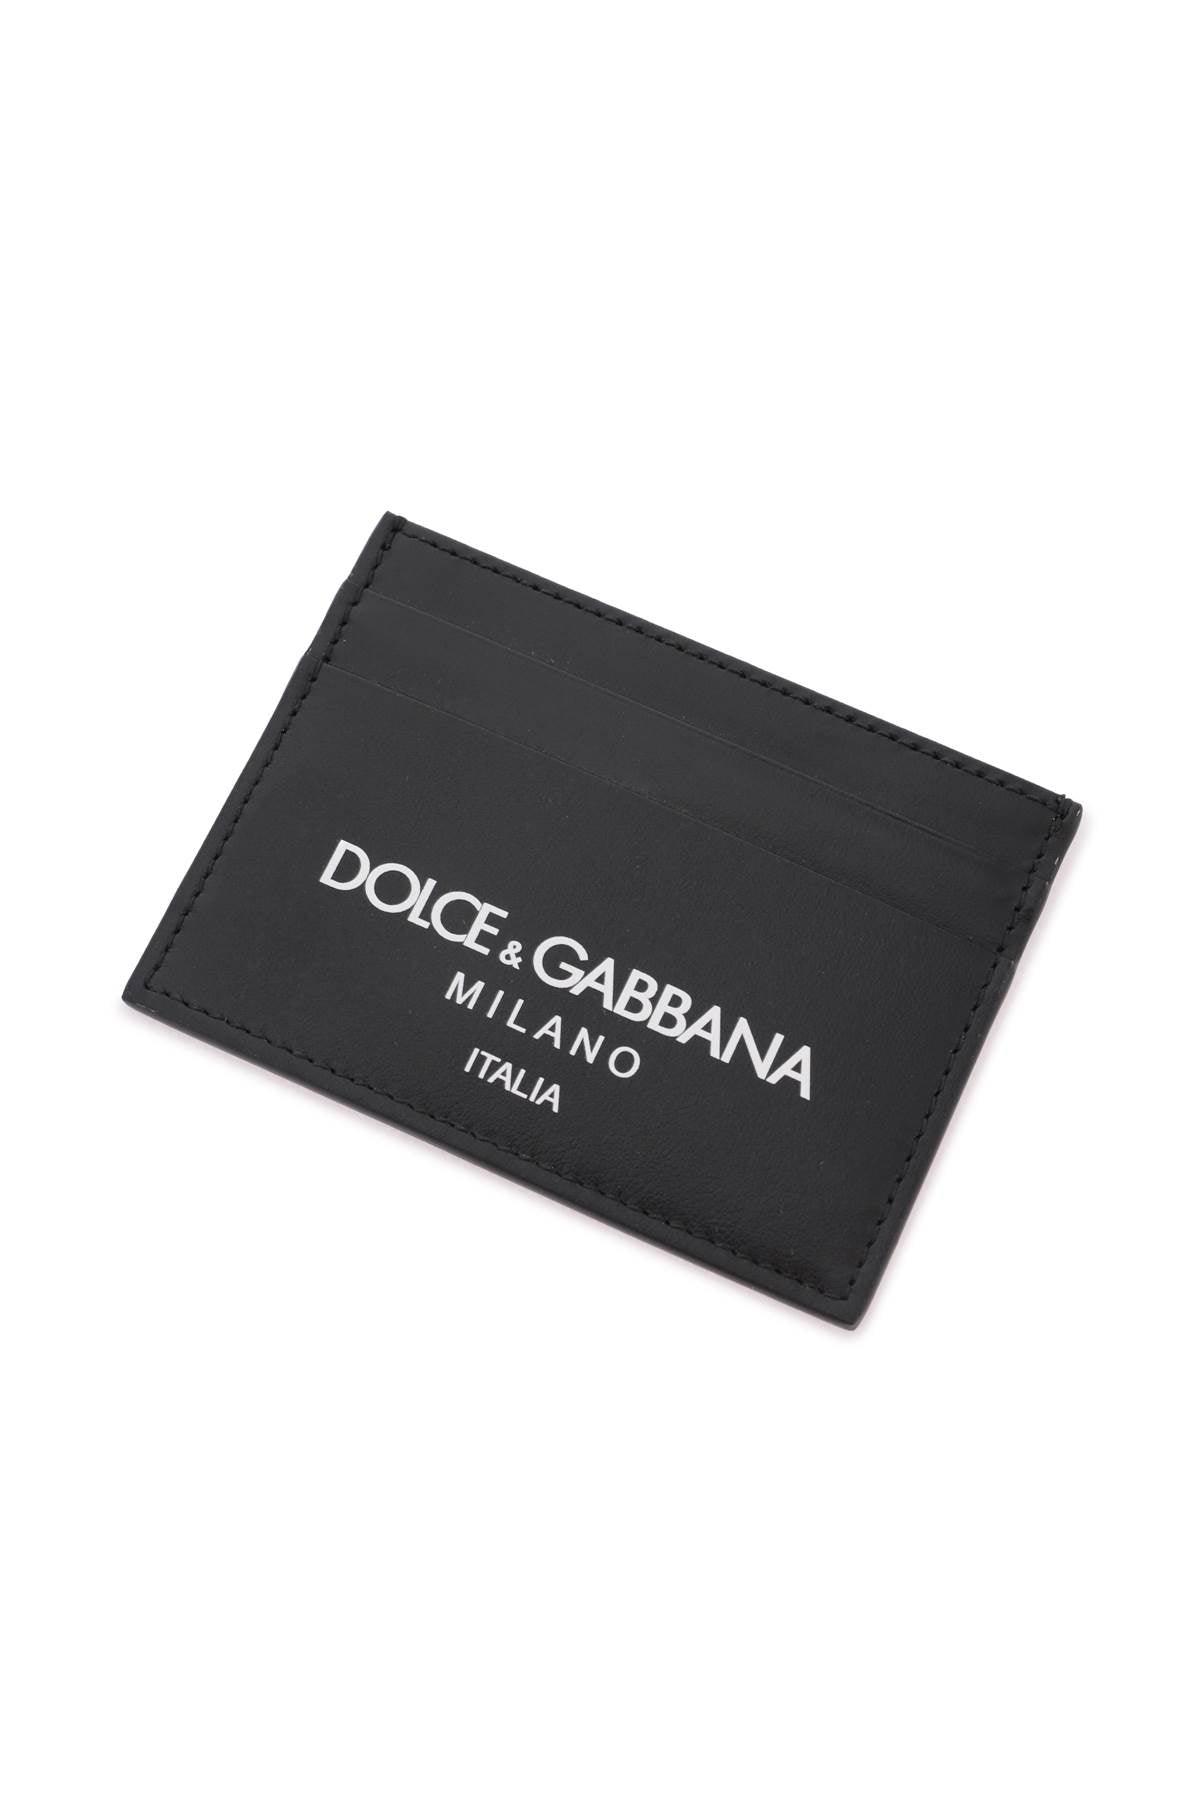 Dolce & Gabbana Logo Leather Cardholder - JOHN JULIA